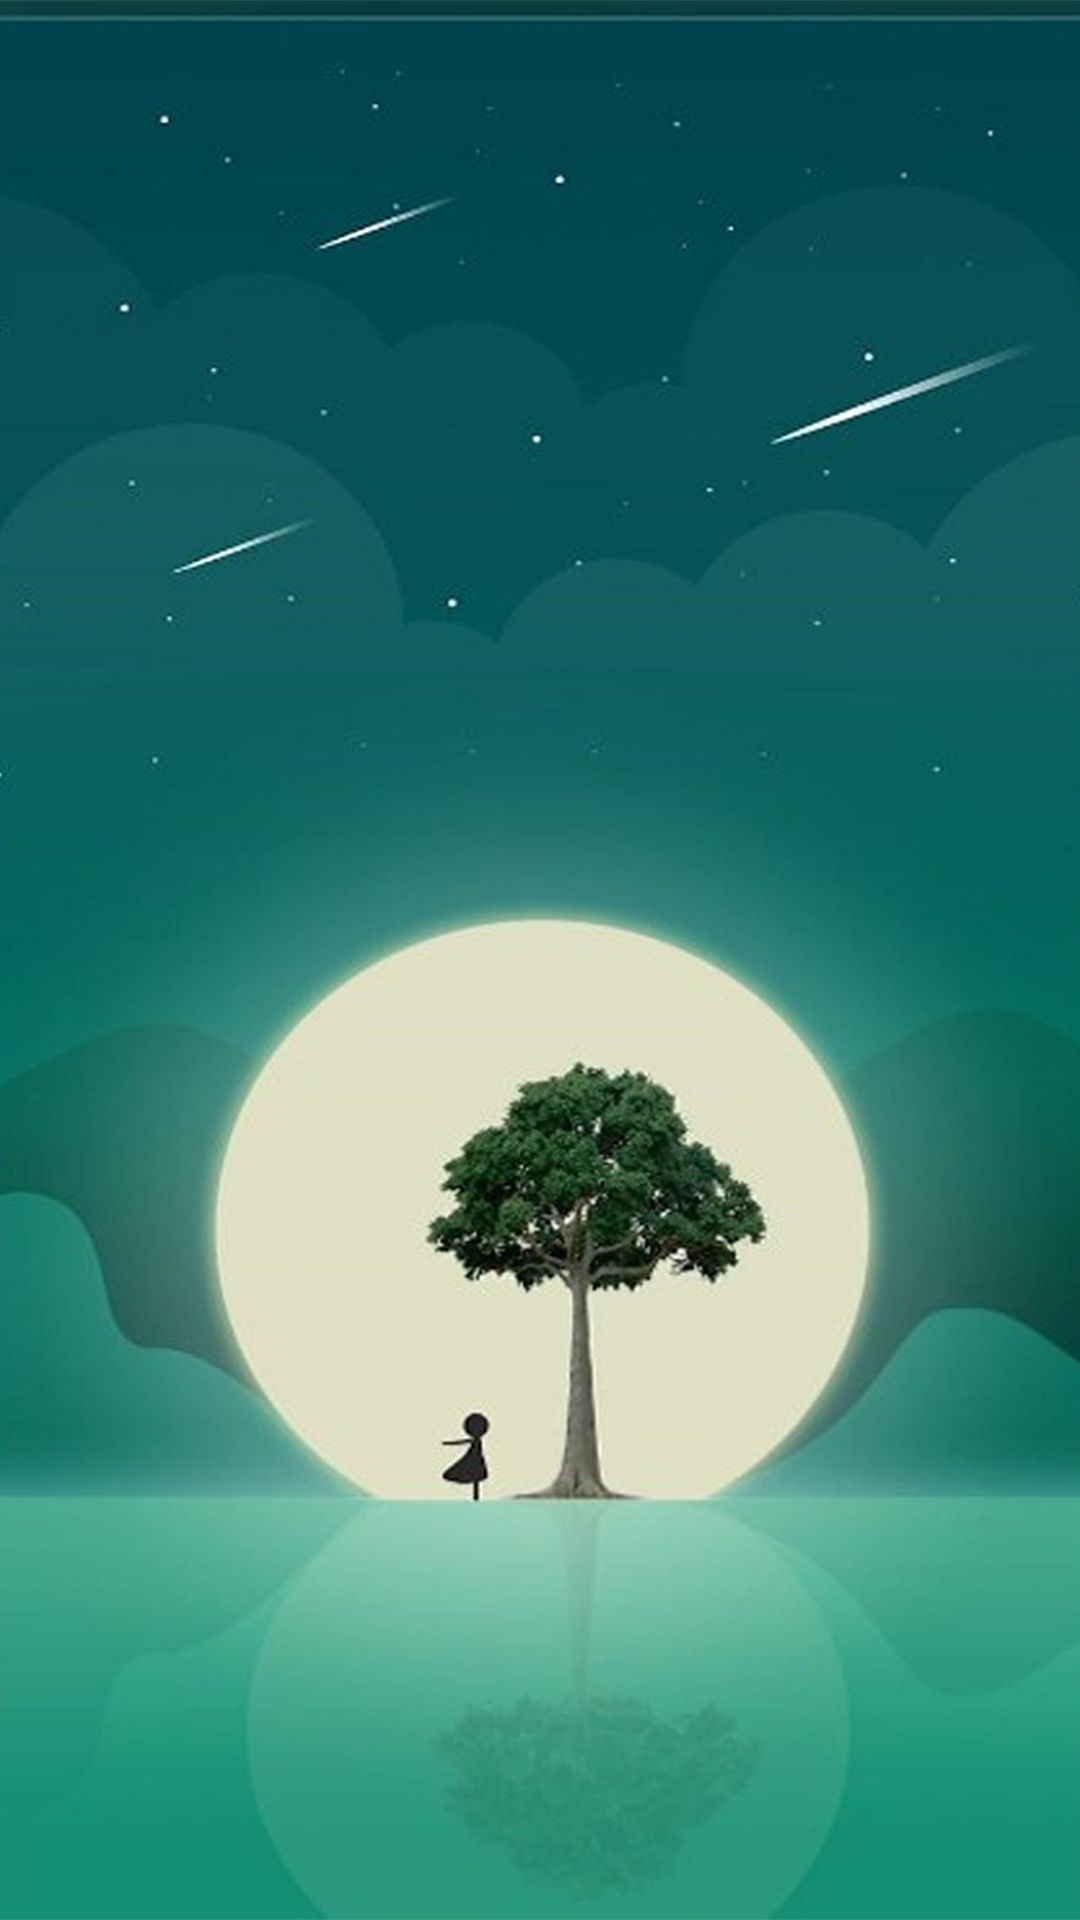 iPhone Wallpaper. Sky, Nature, Natural landscape, Tree, Green, Illustration